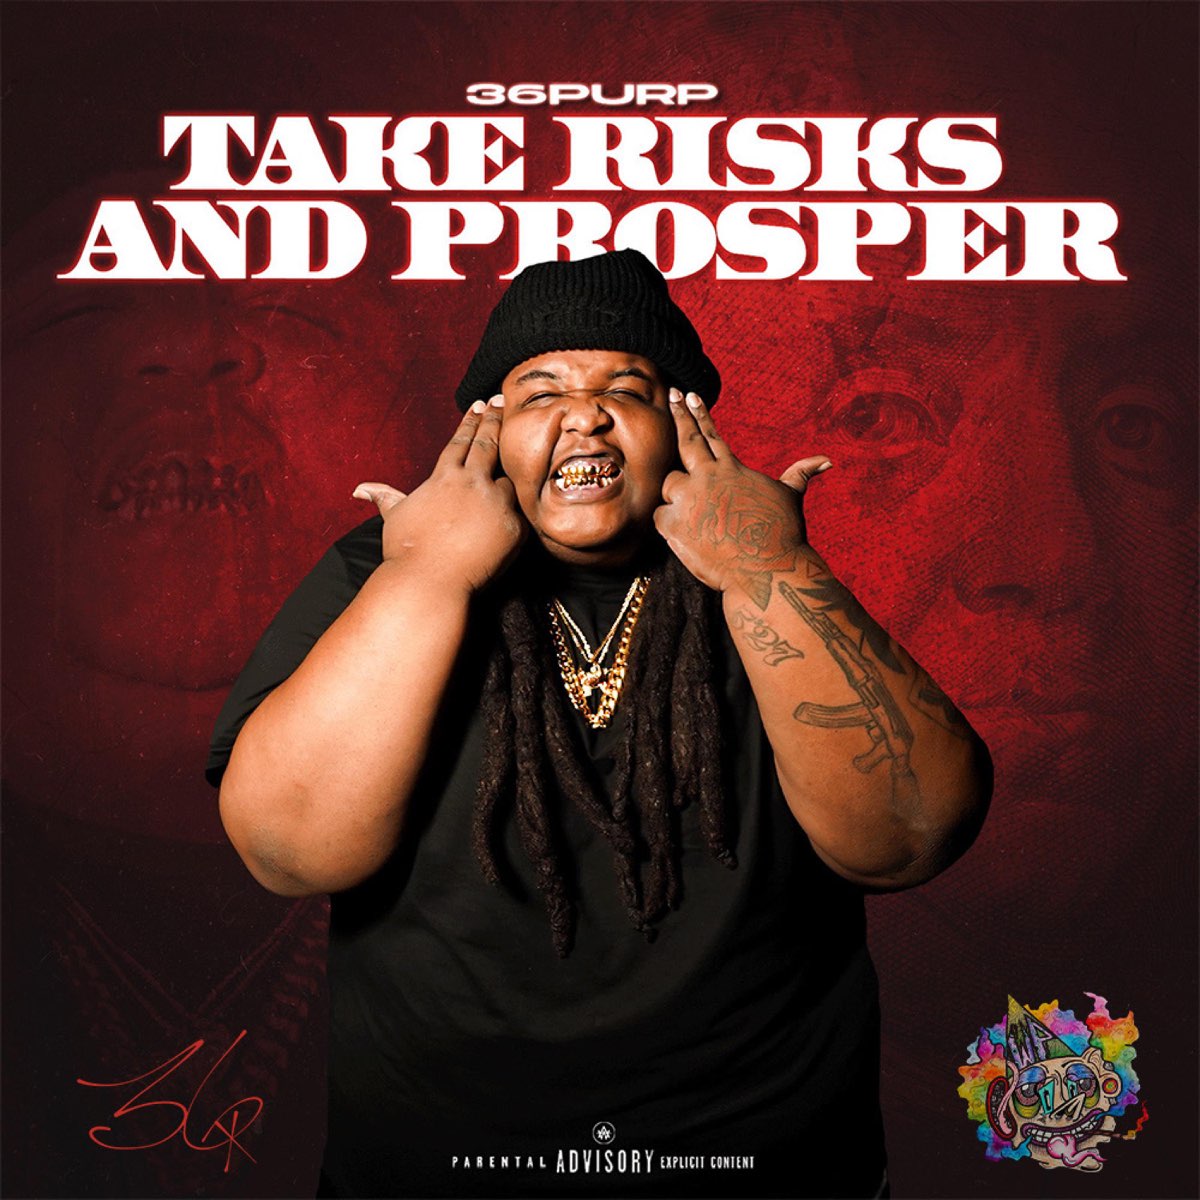 Take Risks and Prosper - Album by 36purp - Apple Music